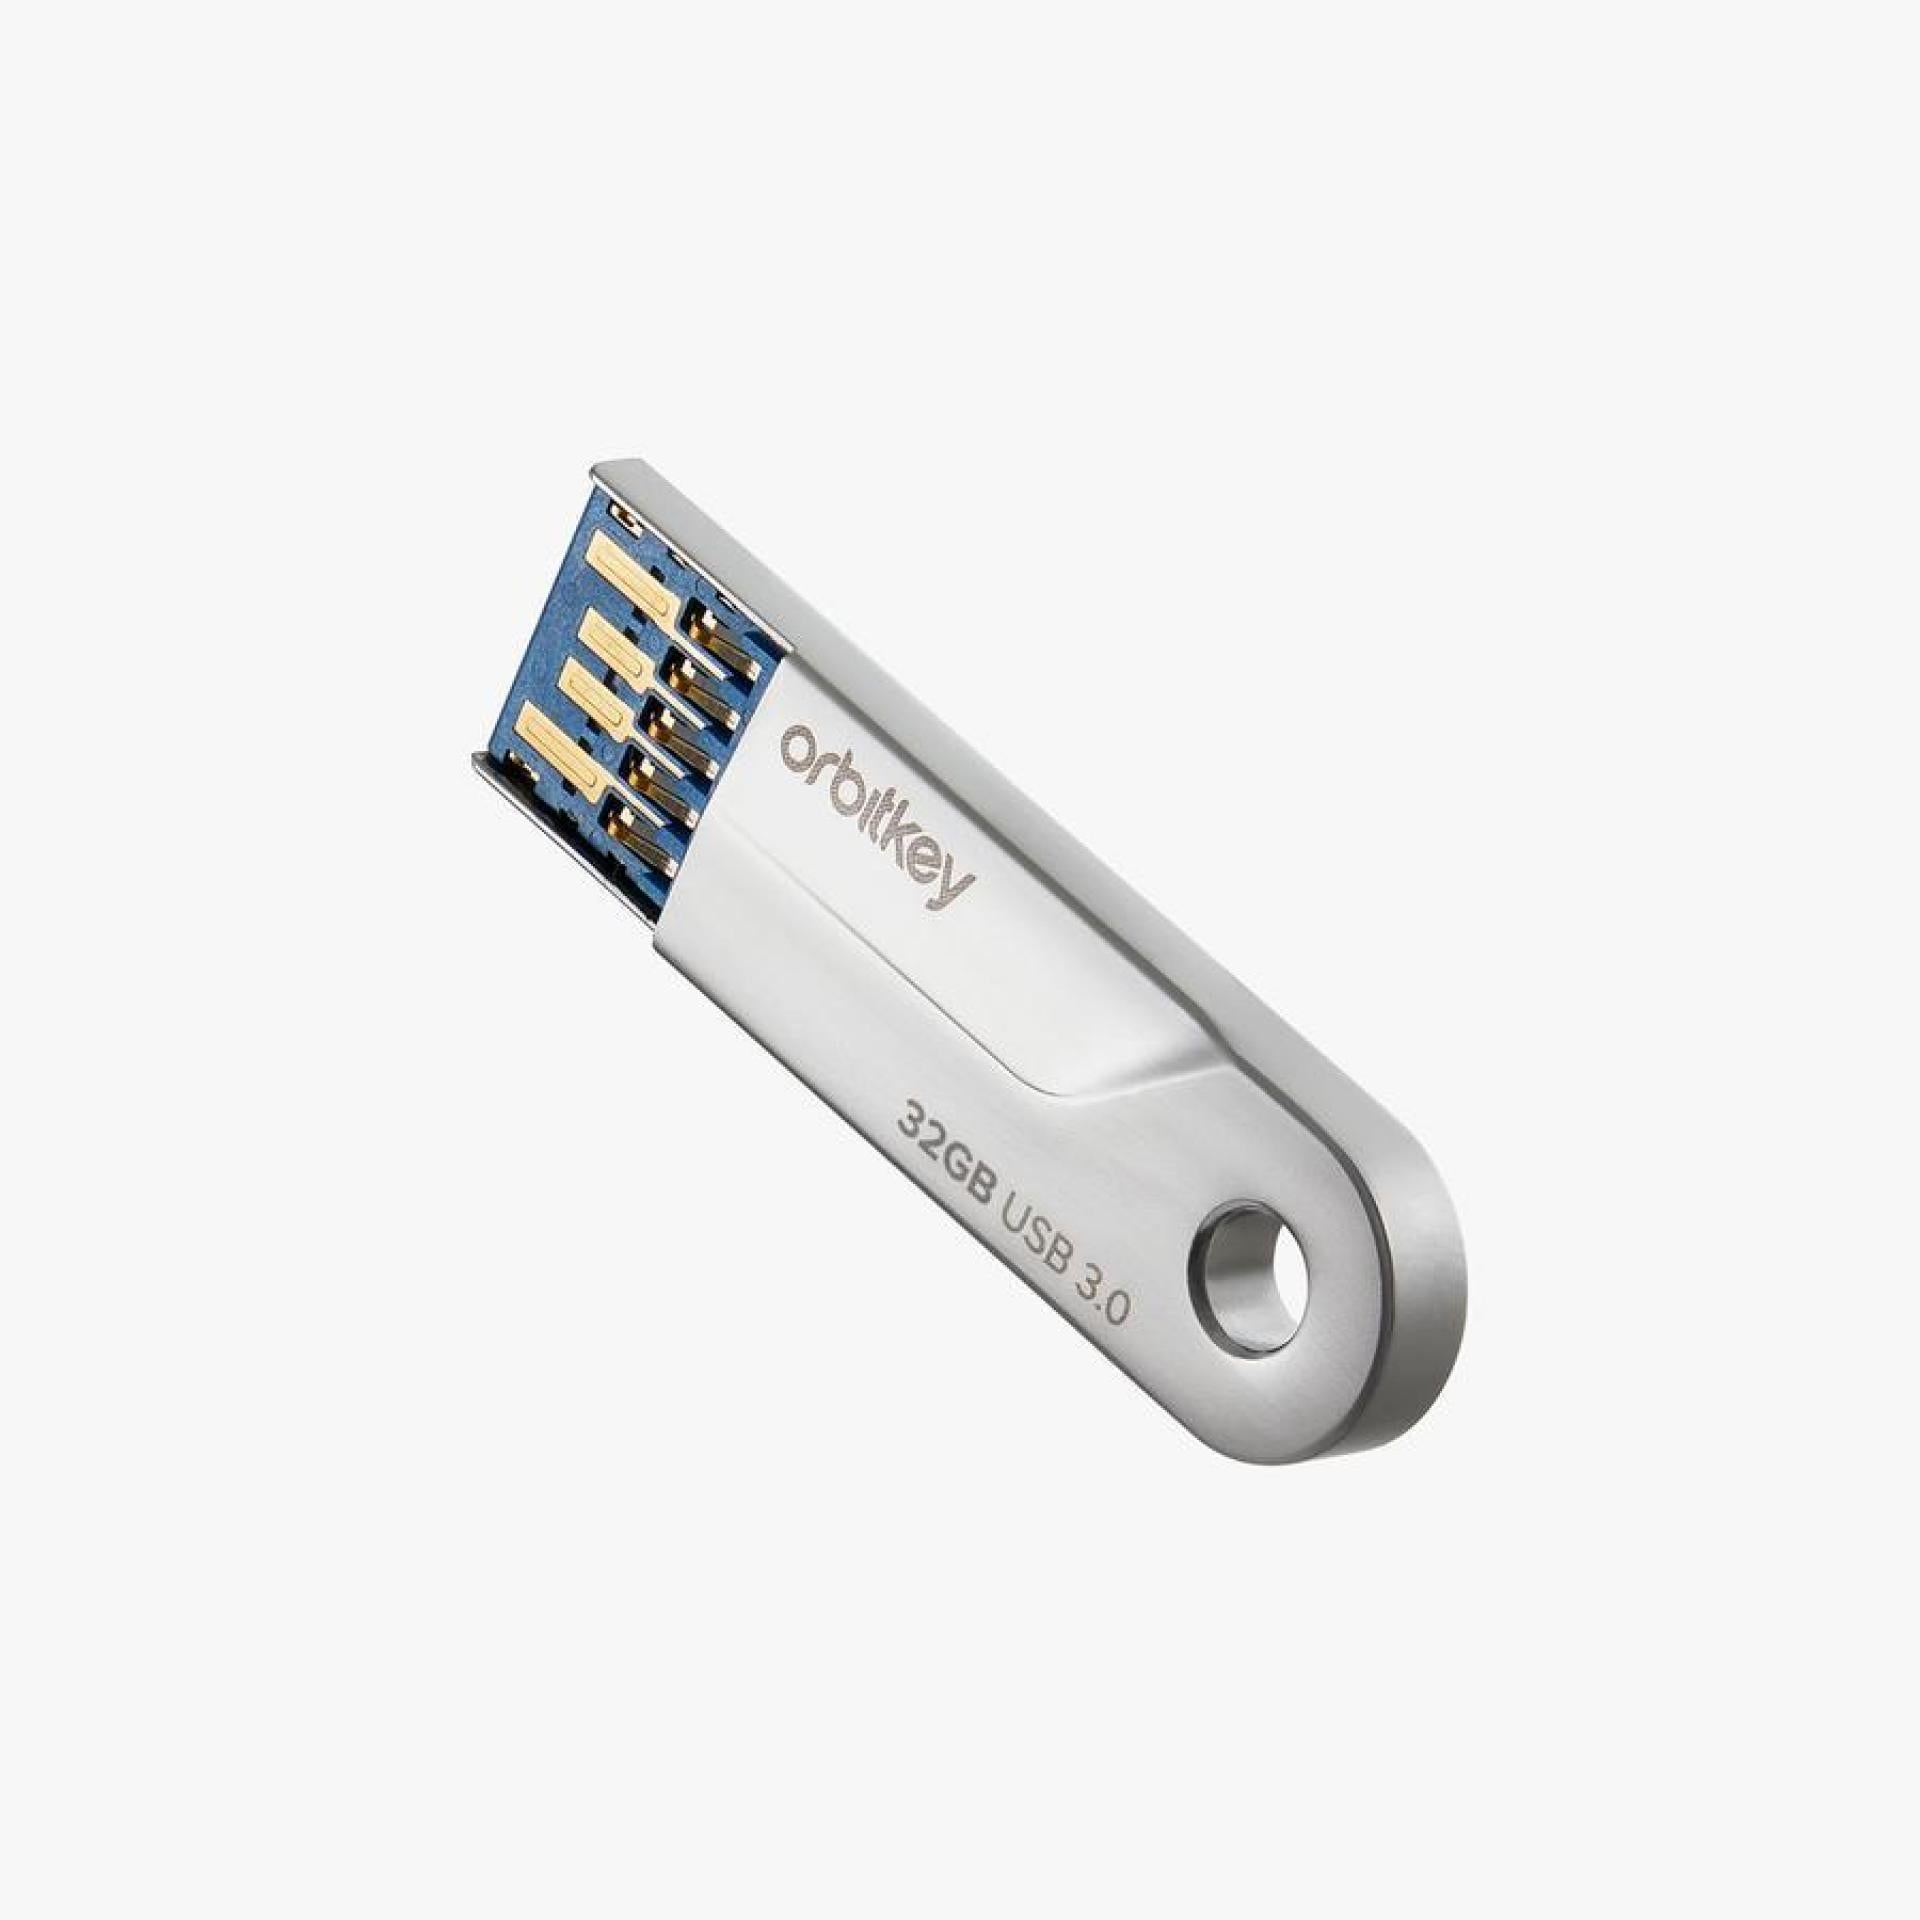 Orbitkey Key Organiser 2.0 Zubehör USB-Stick 3.0 Kapazität 32 GB